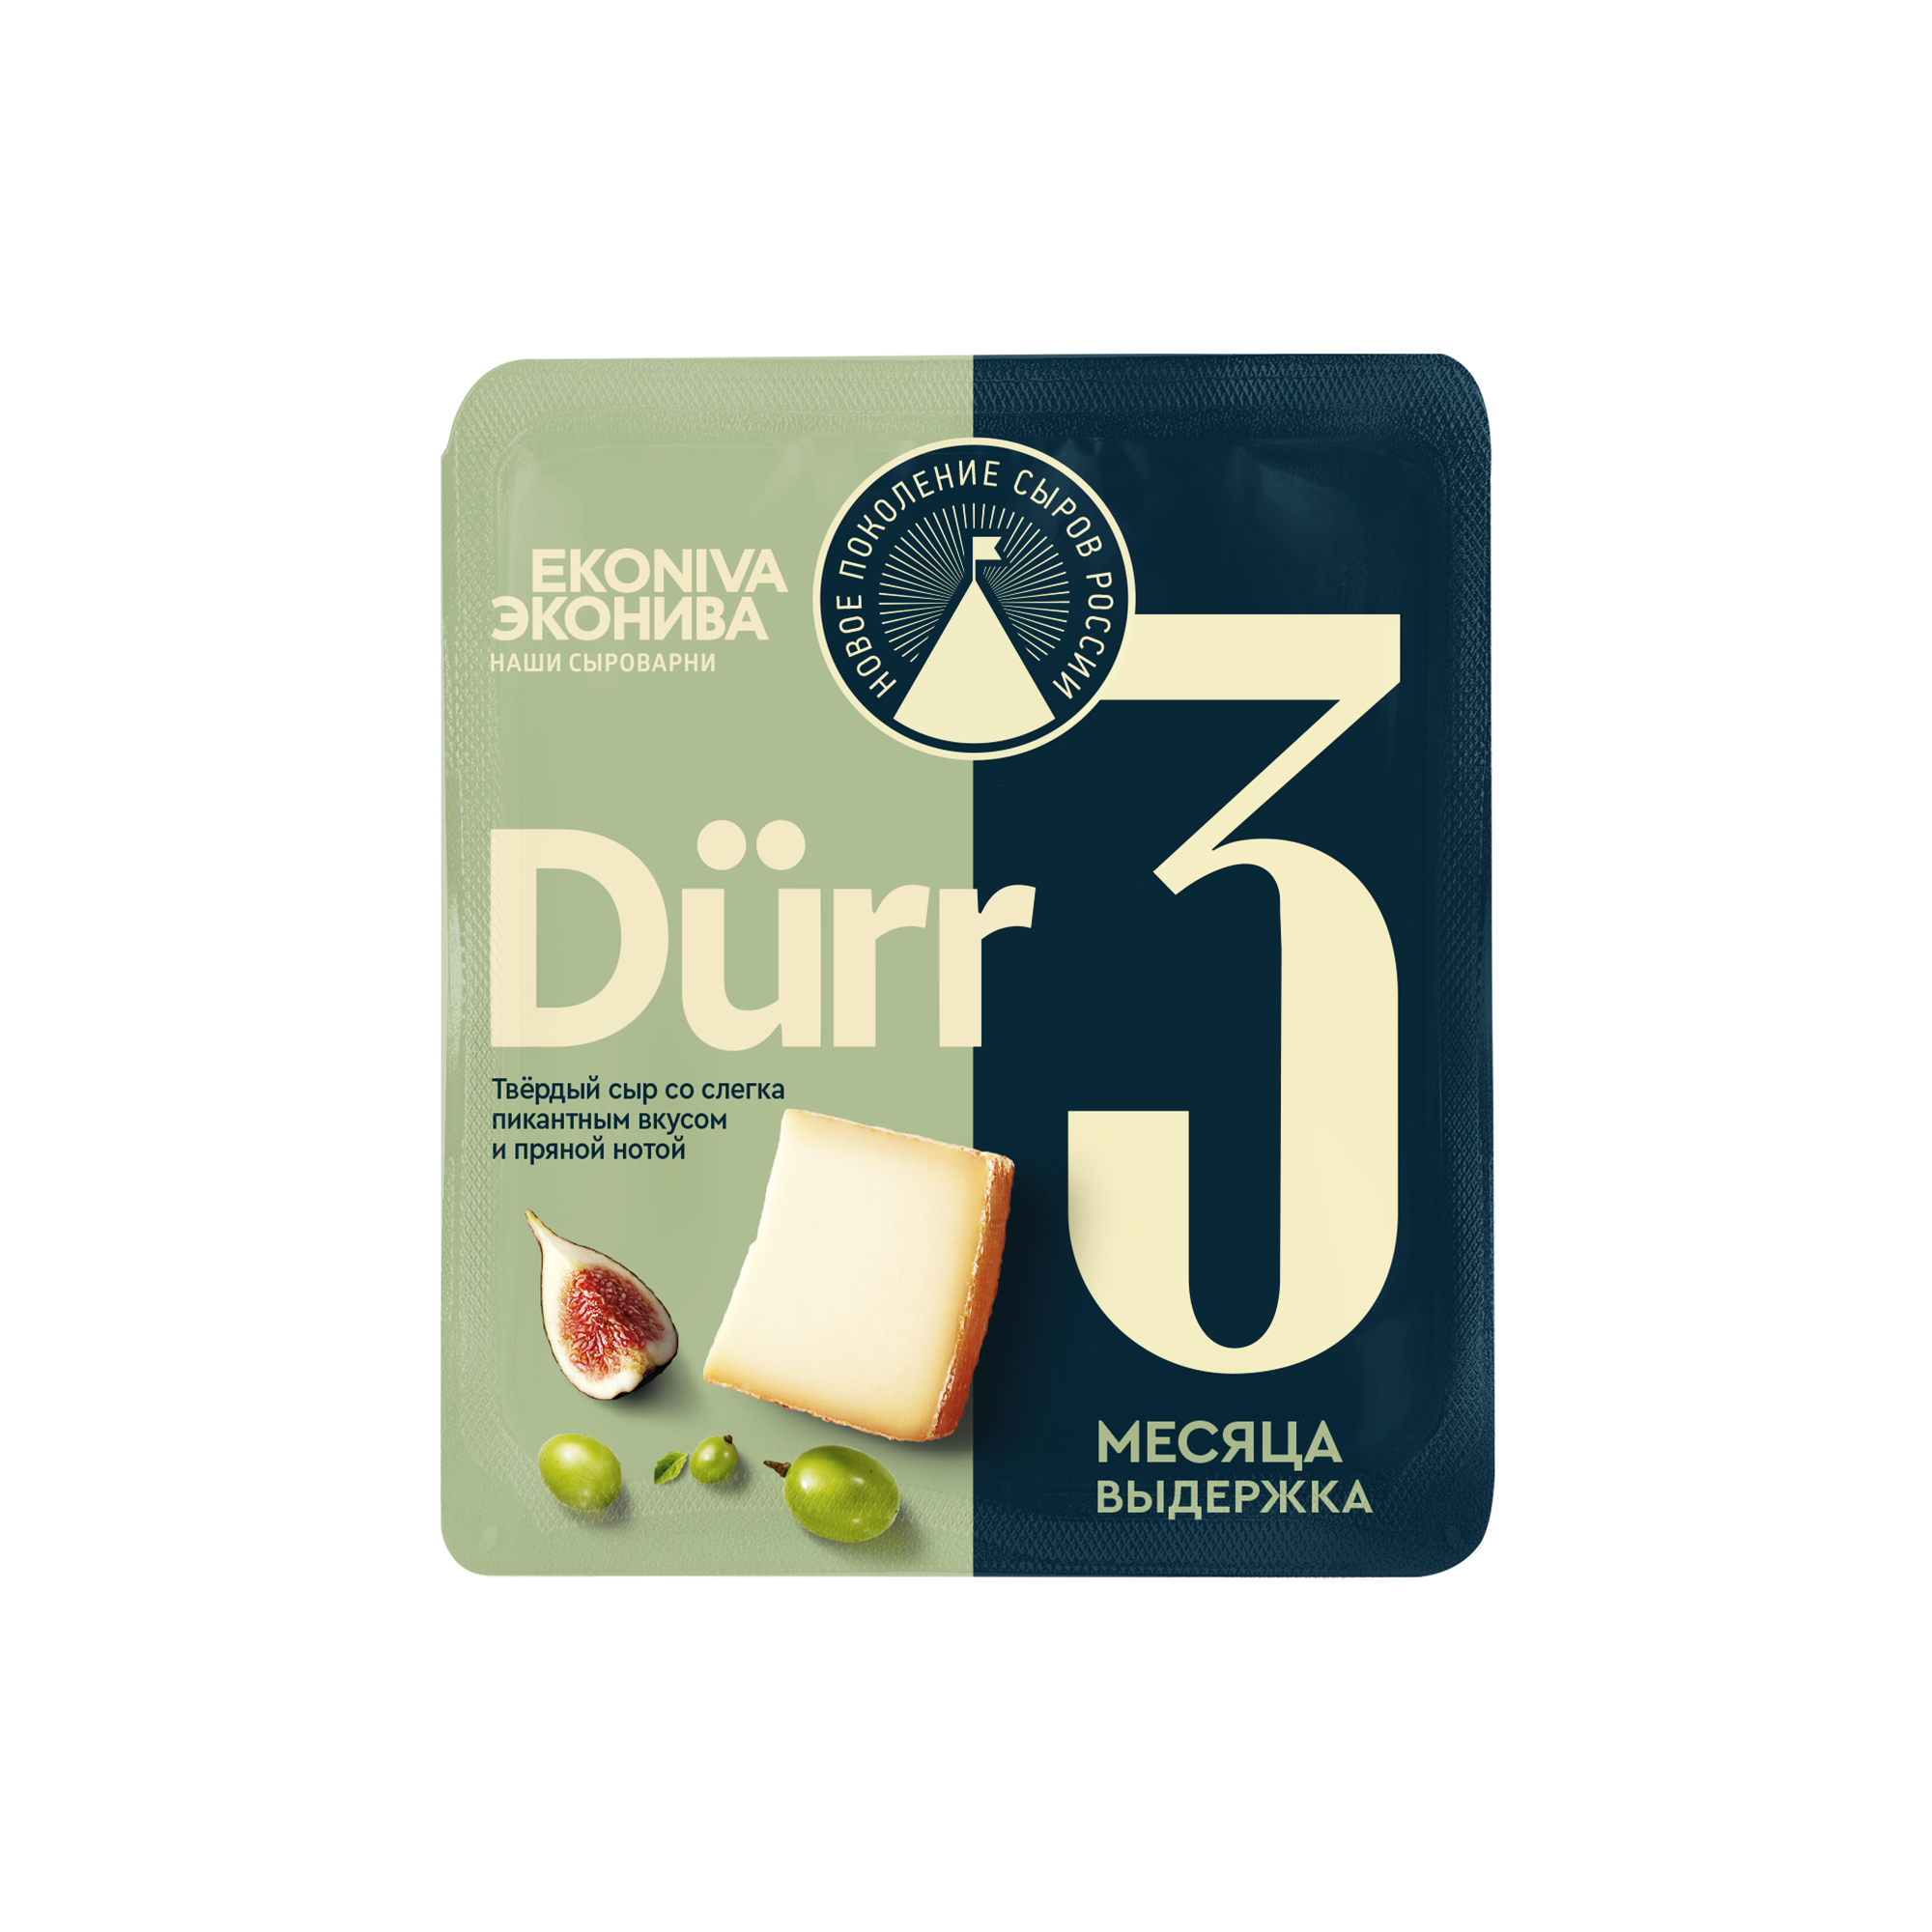 Сыр твердый ЭкоНива Durr выдержанный 3 месяца 50%, 200 г